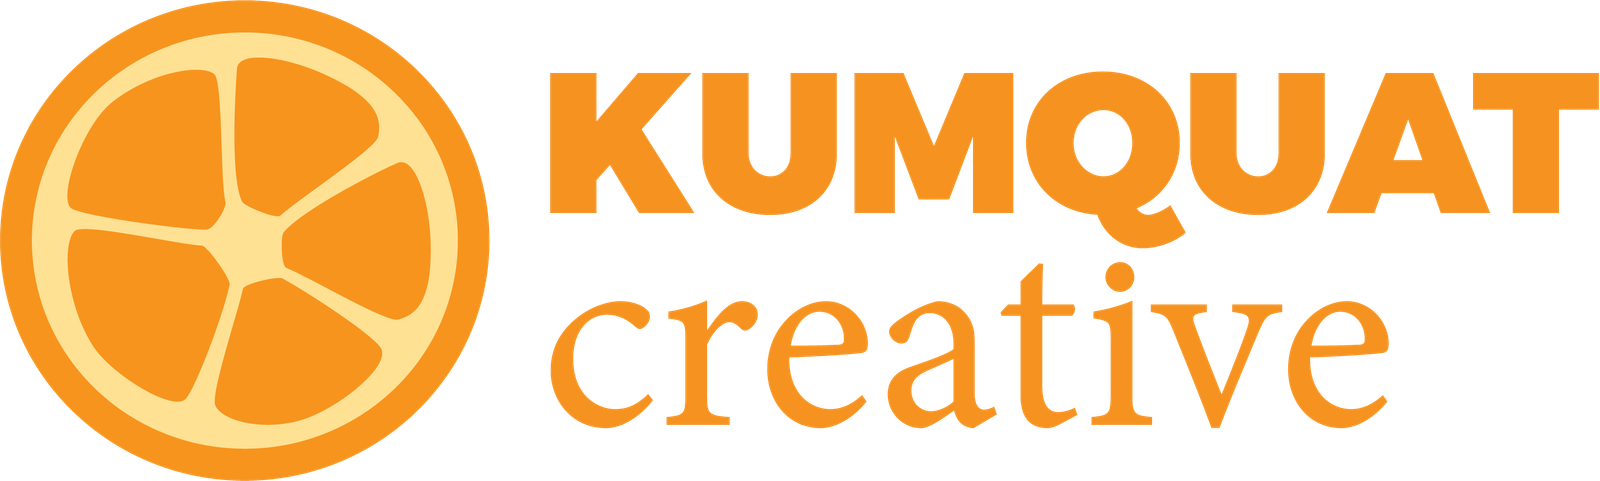 Kumquat Creative Final Logo